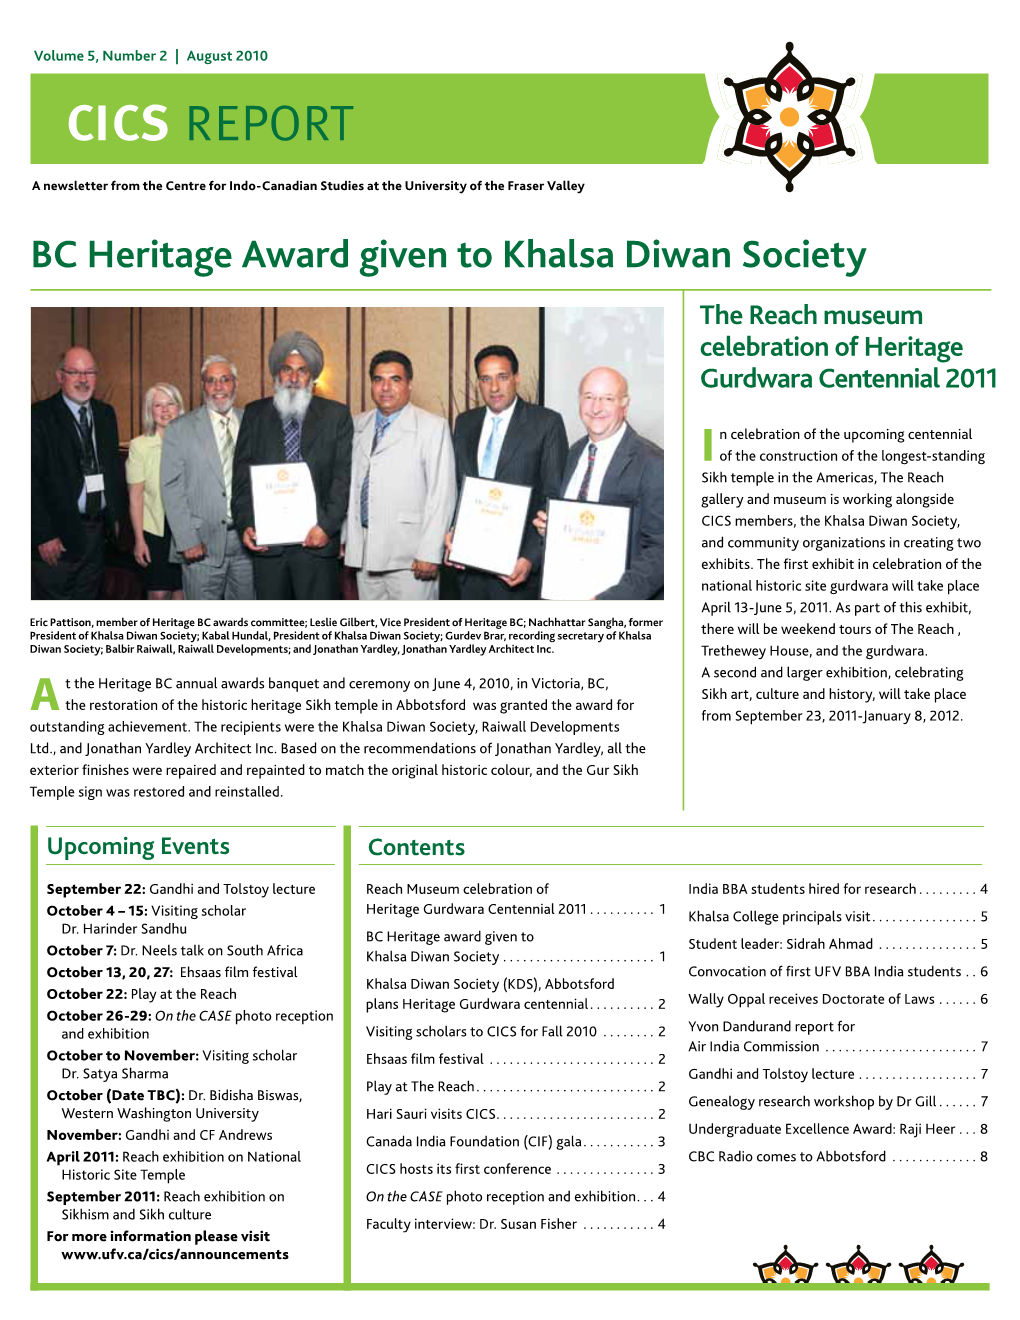 BC Heritage Award Given to Khalsa Diwan Society the Reach Museum Celebration of Heritage Gurdwara Centennial 2011